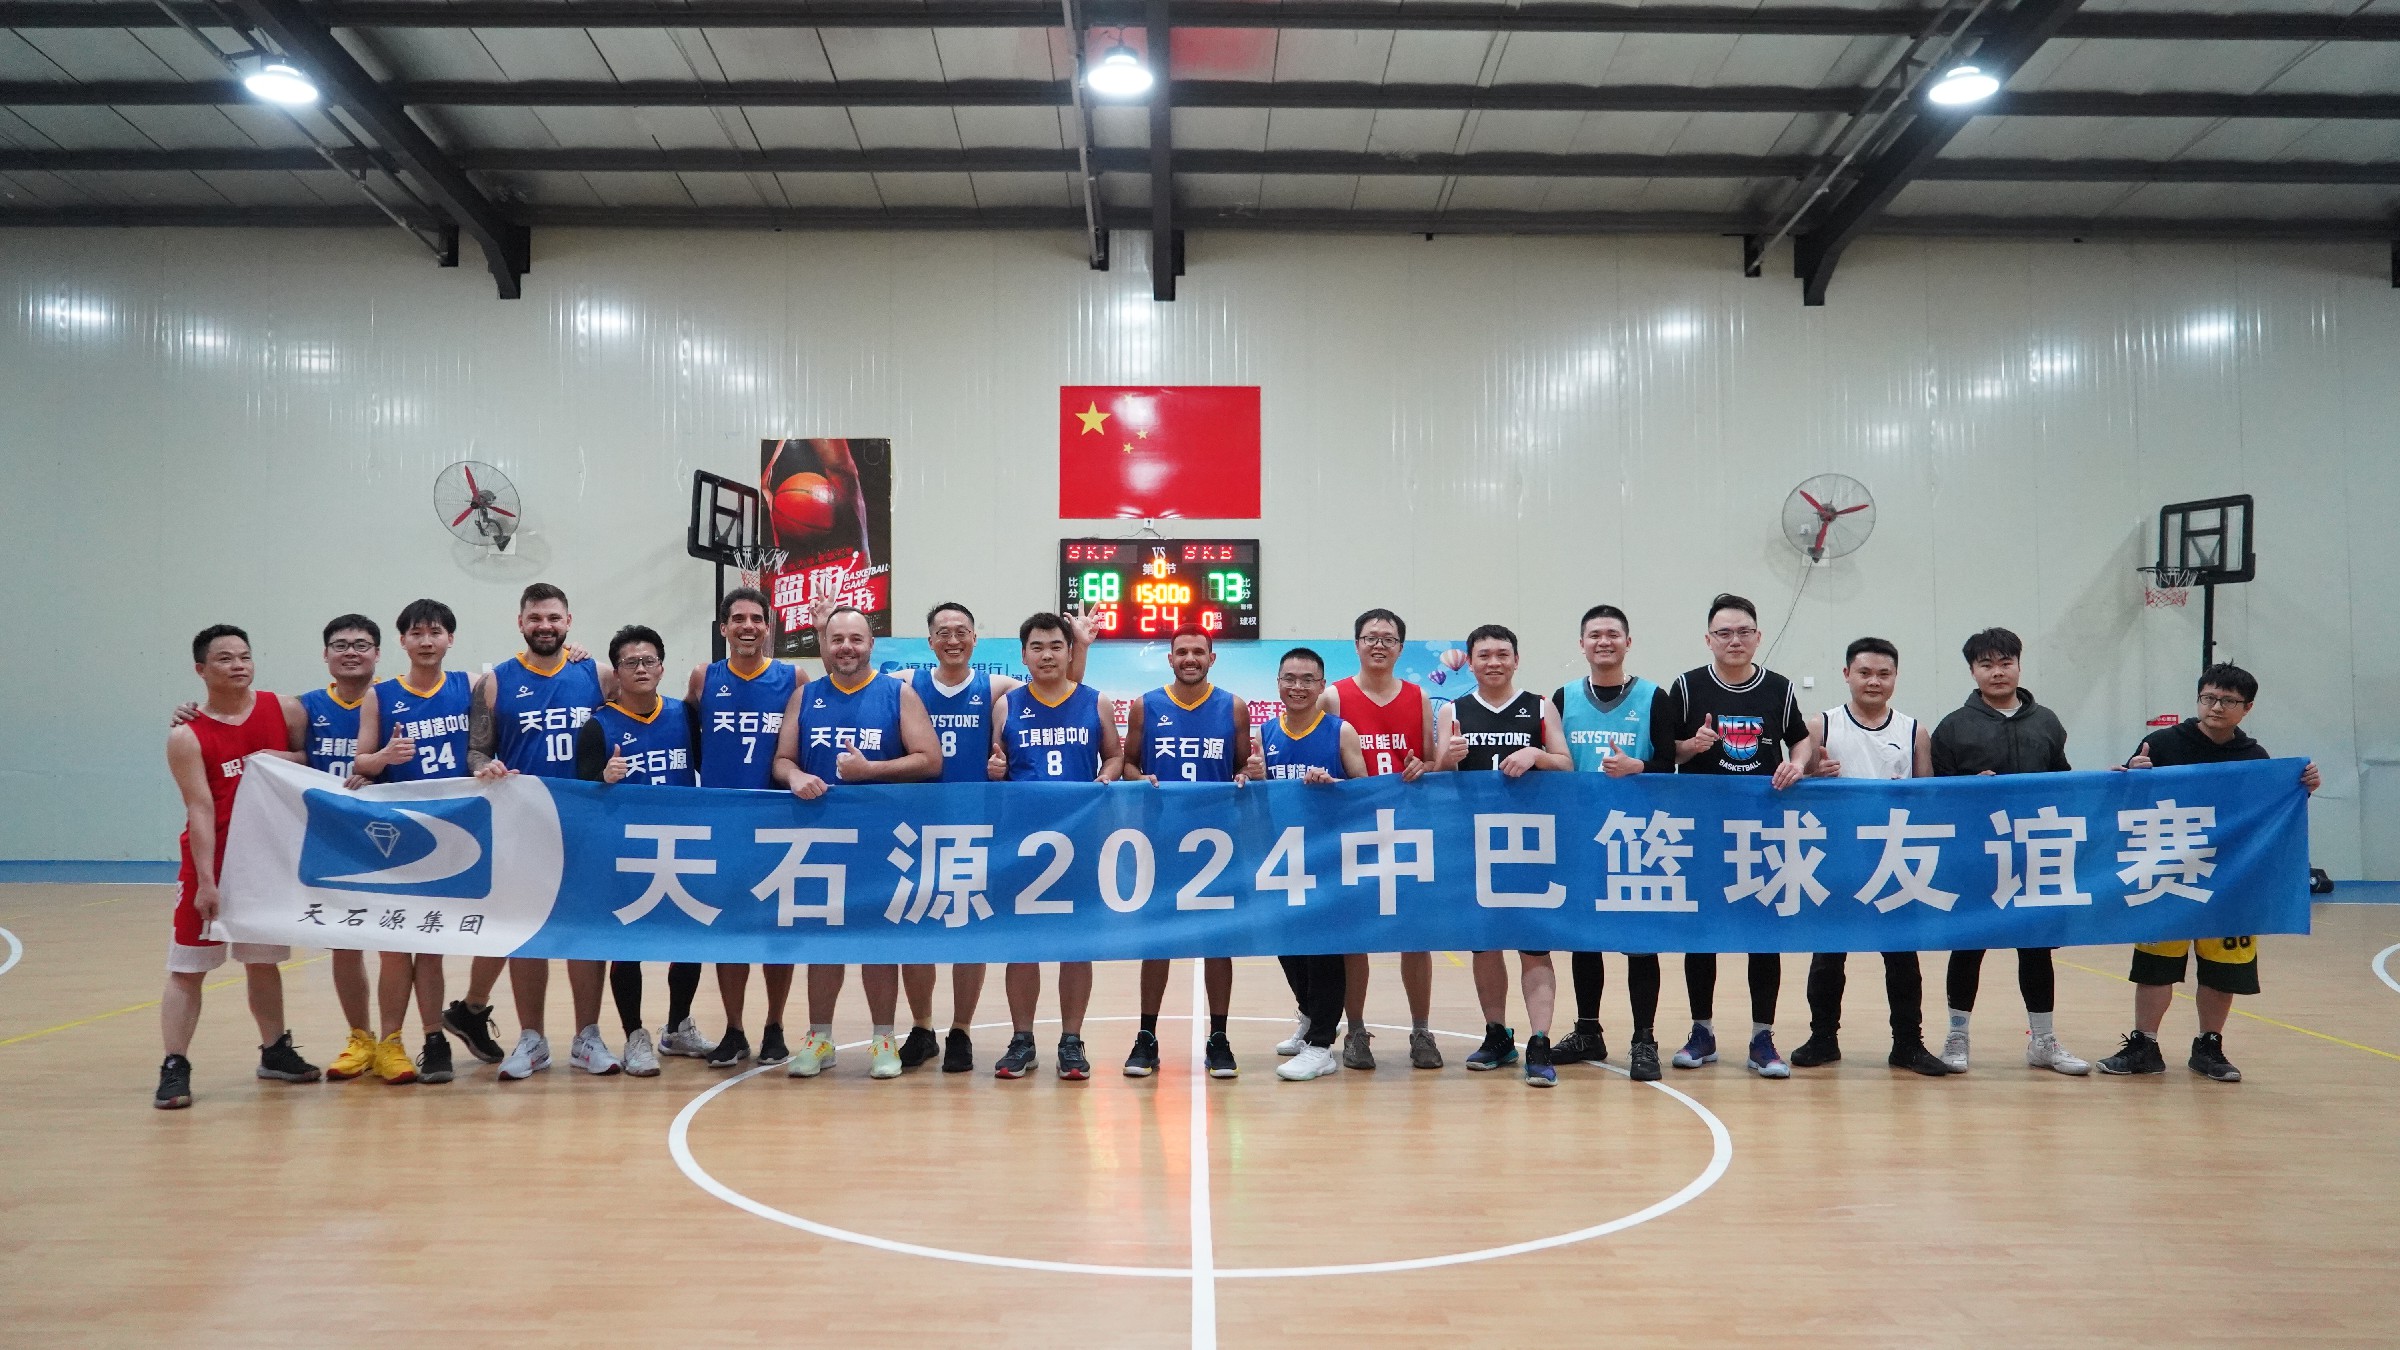 Sino-Brazilian Basketball Friendship Match: Promoting Friendship through Cross-border Exchange